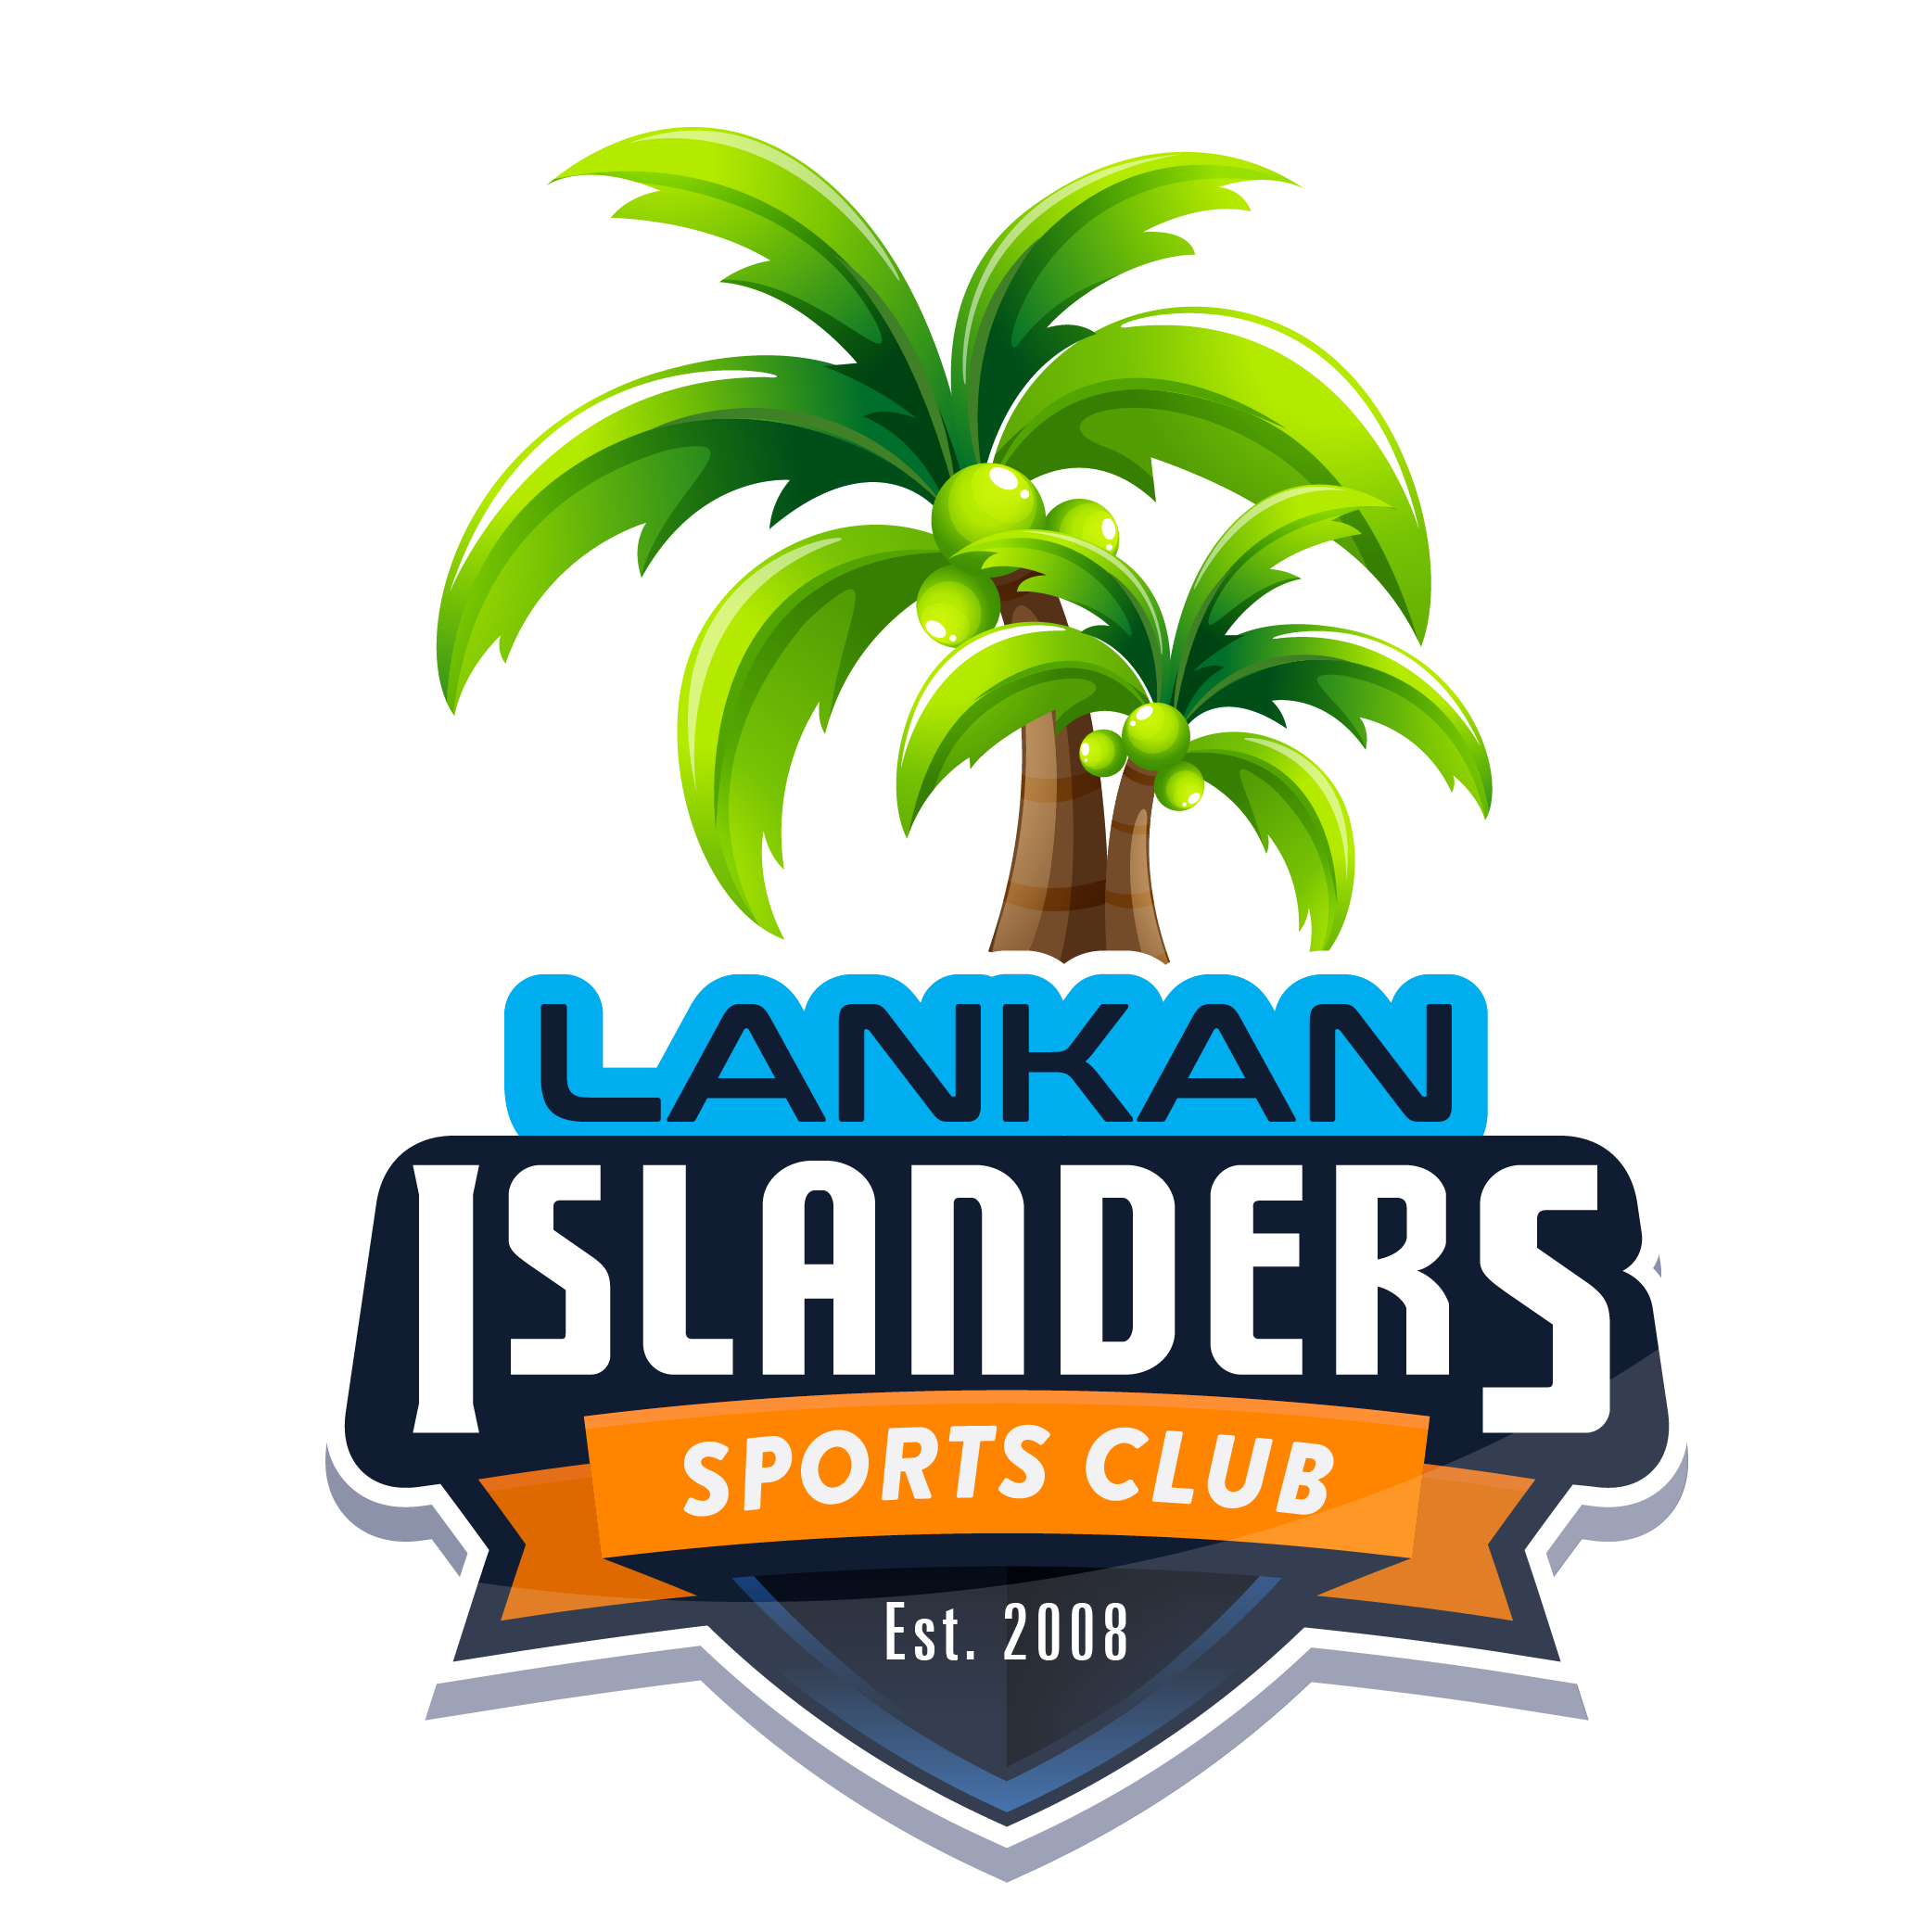 Lankan Islanders Sports Club